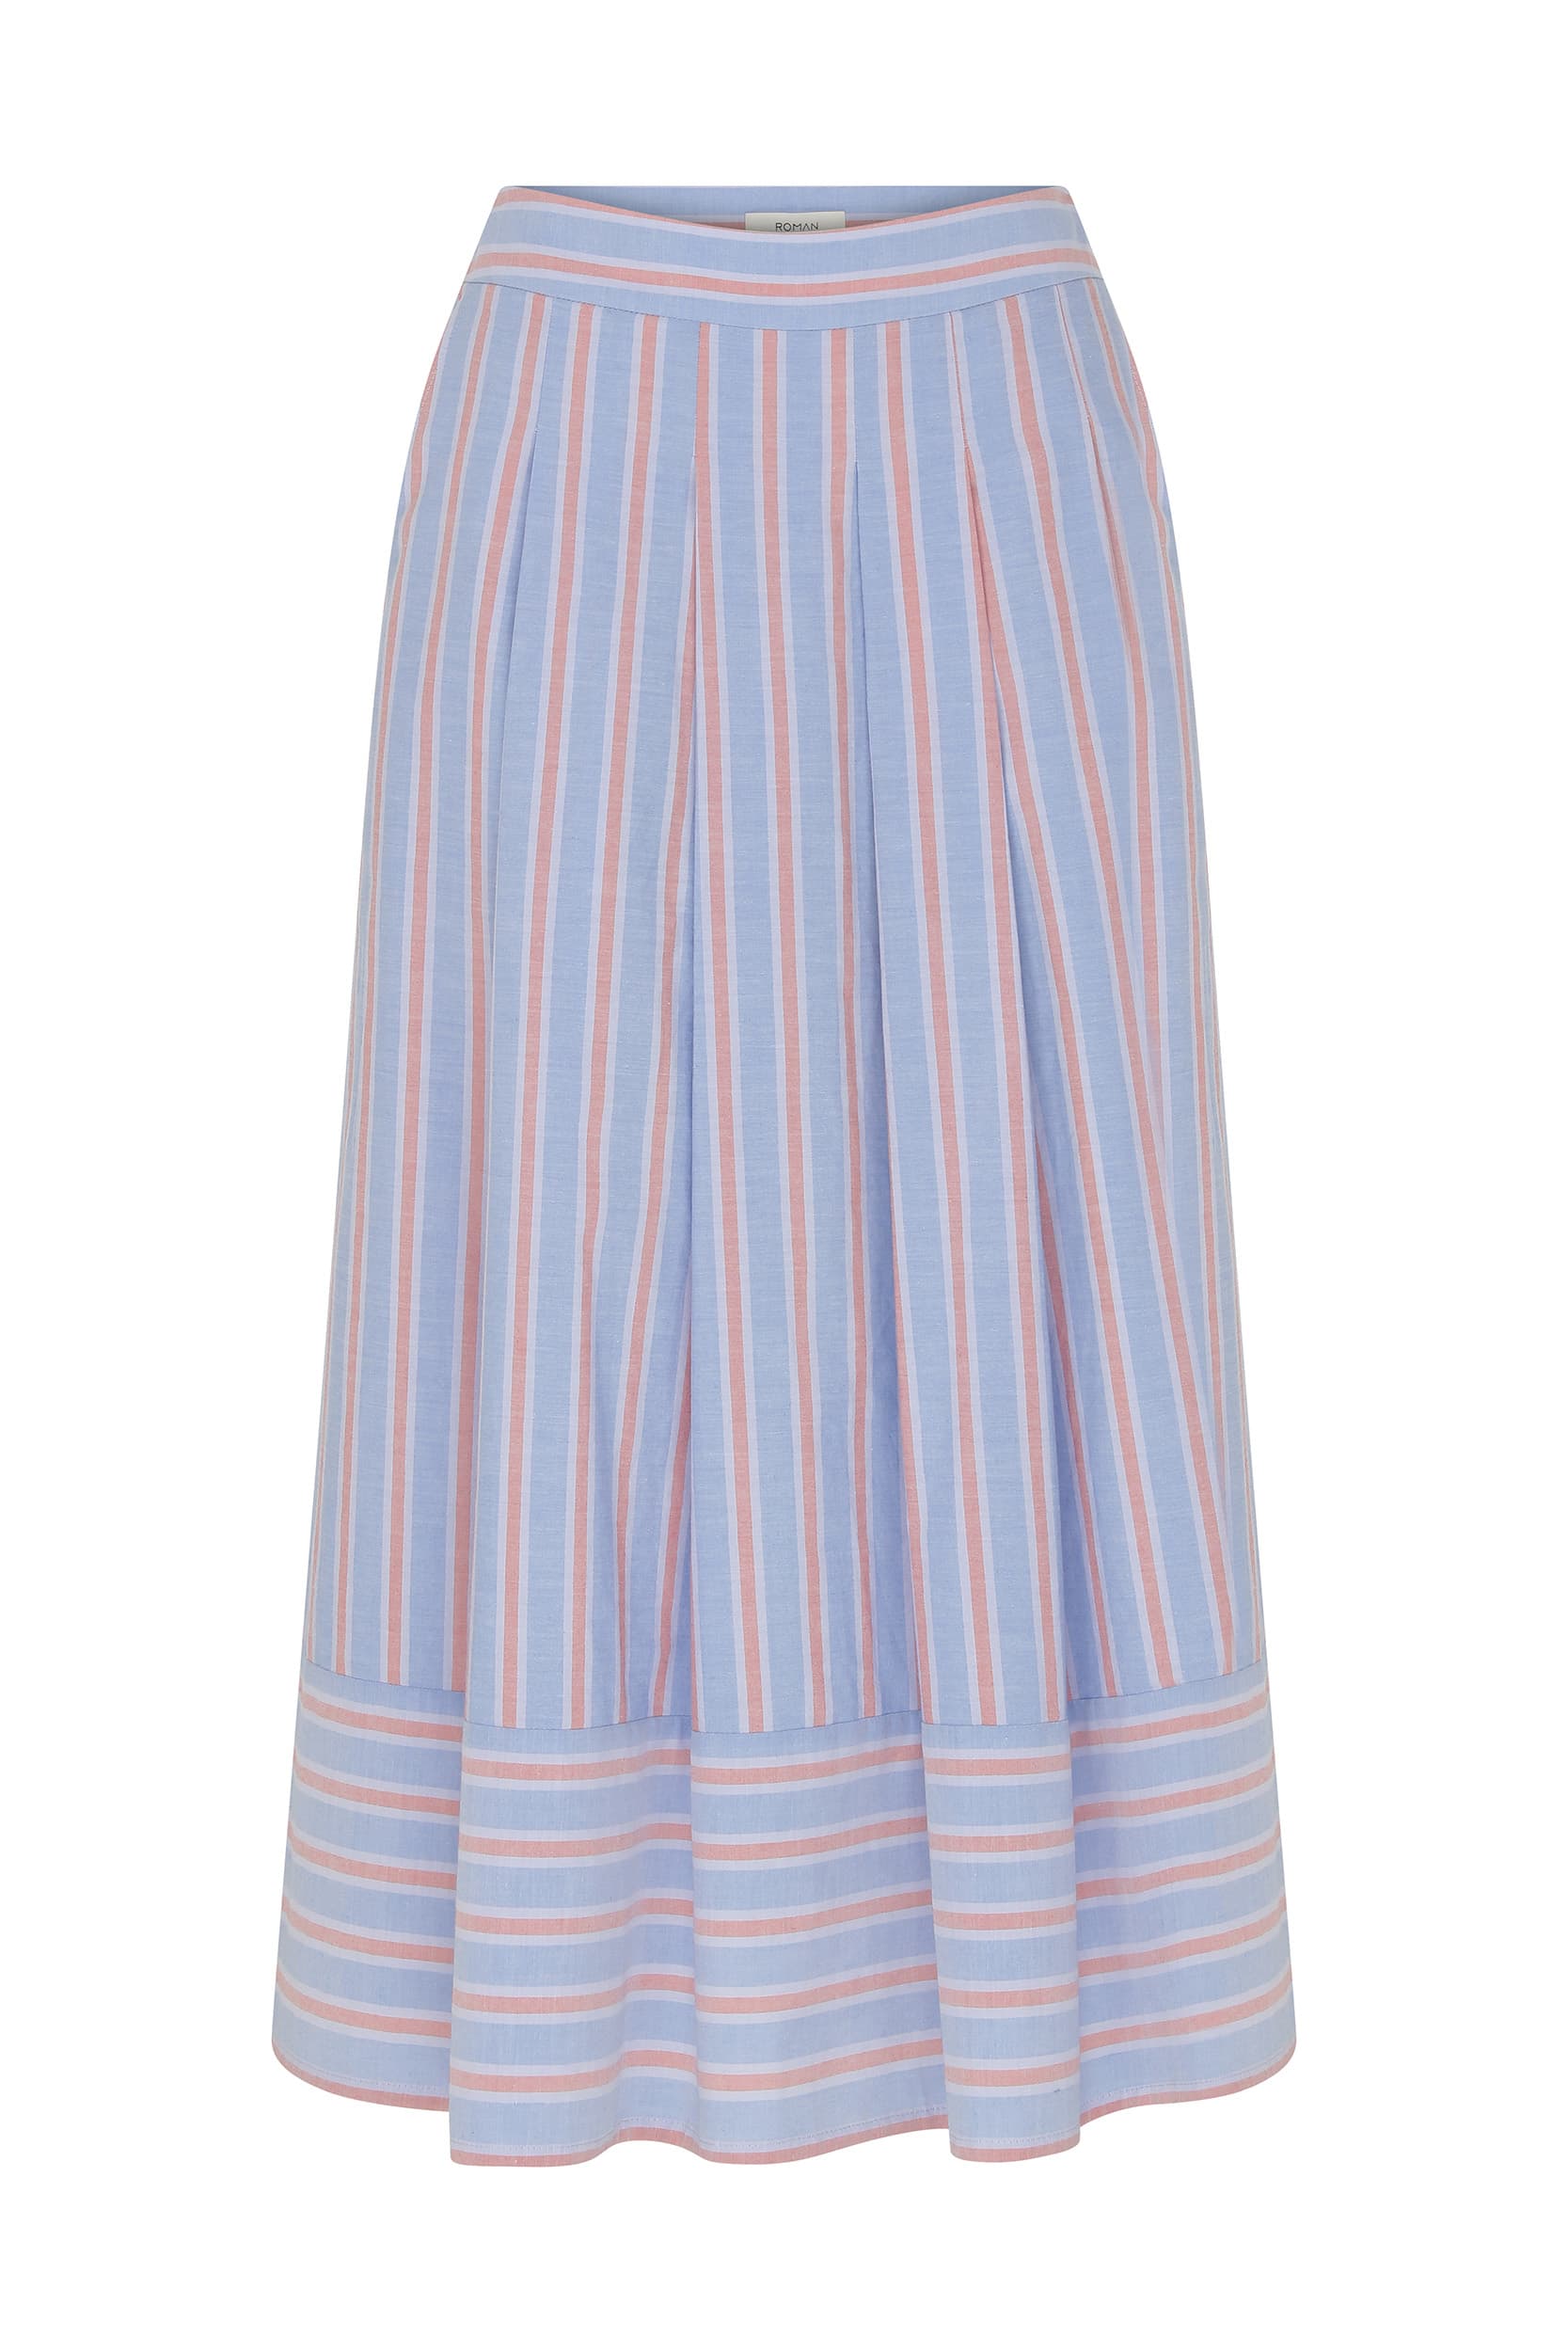 Blue Pink Line Patterned Pleated Skirt -- [ORIGINAL]